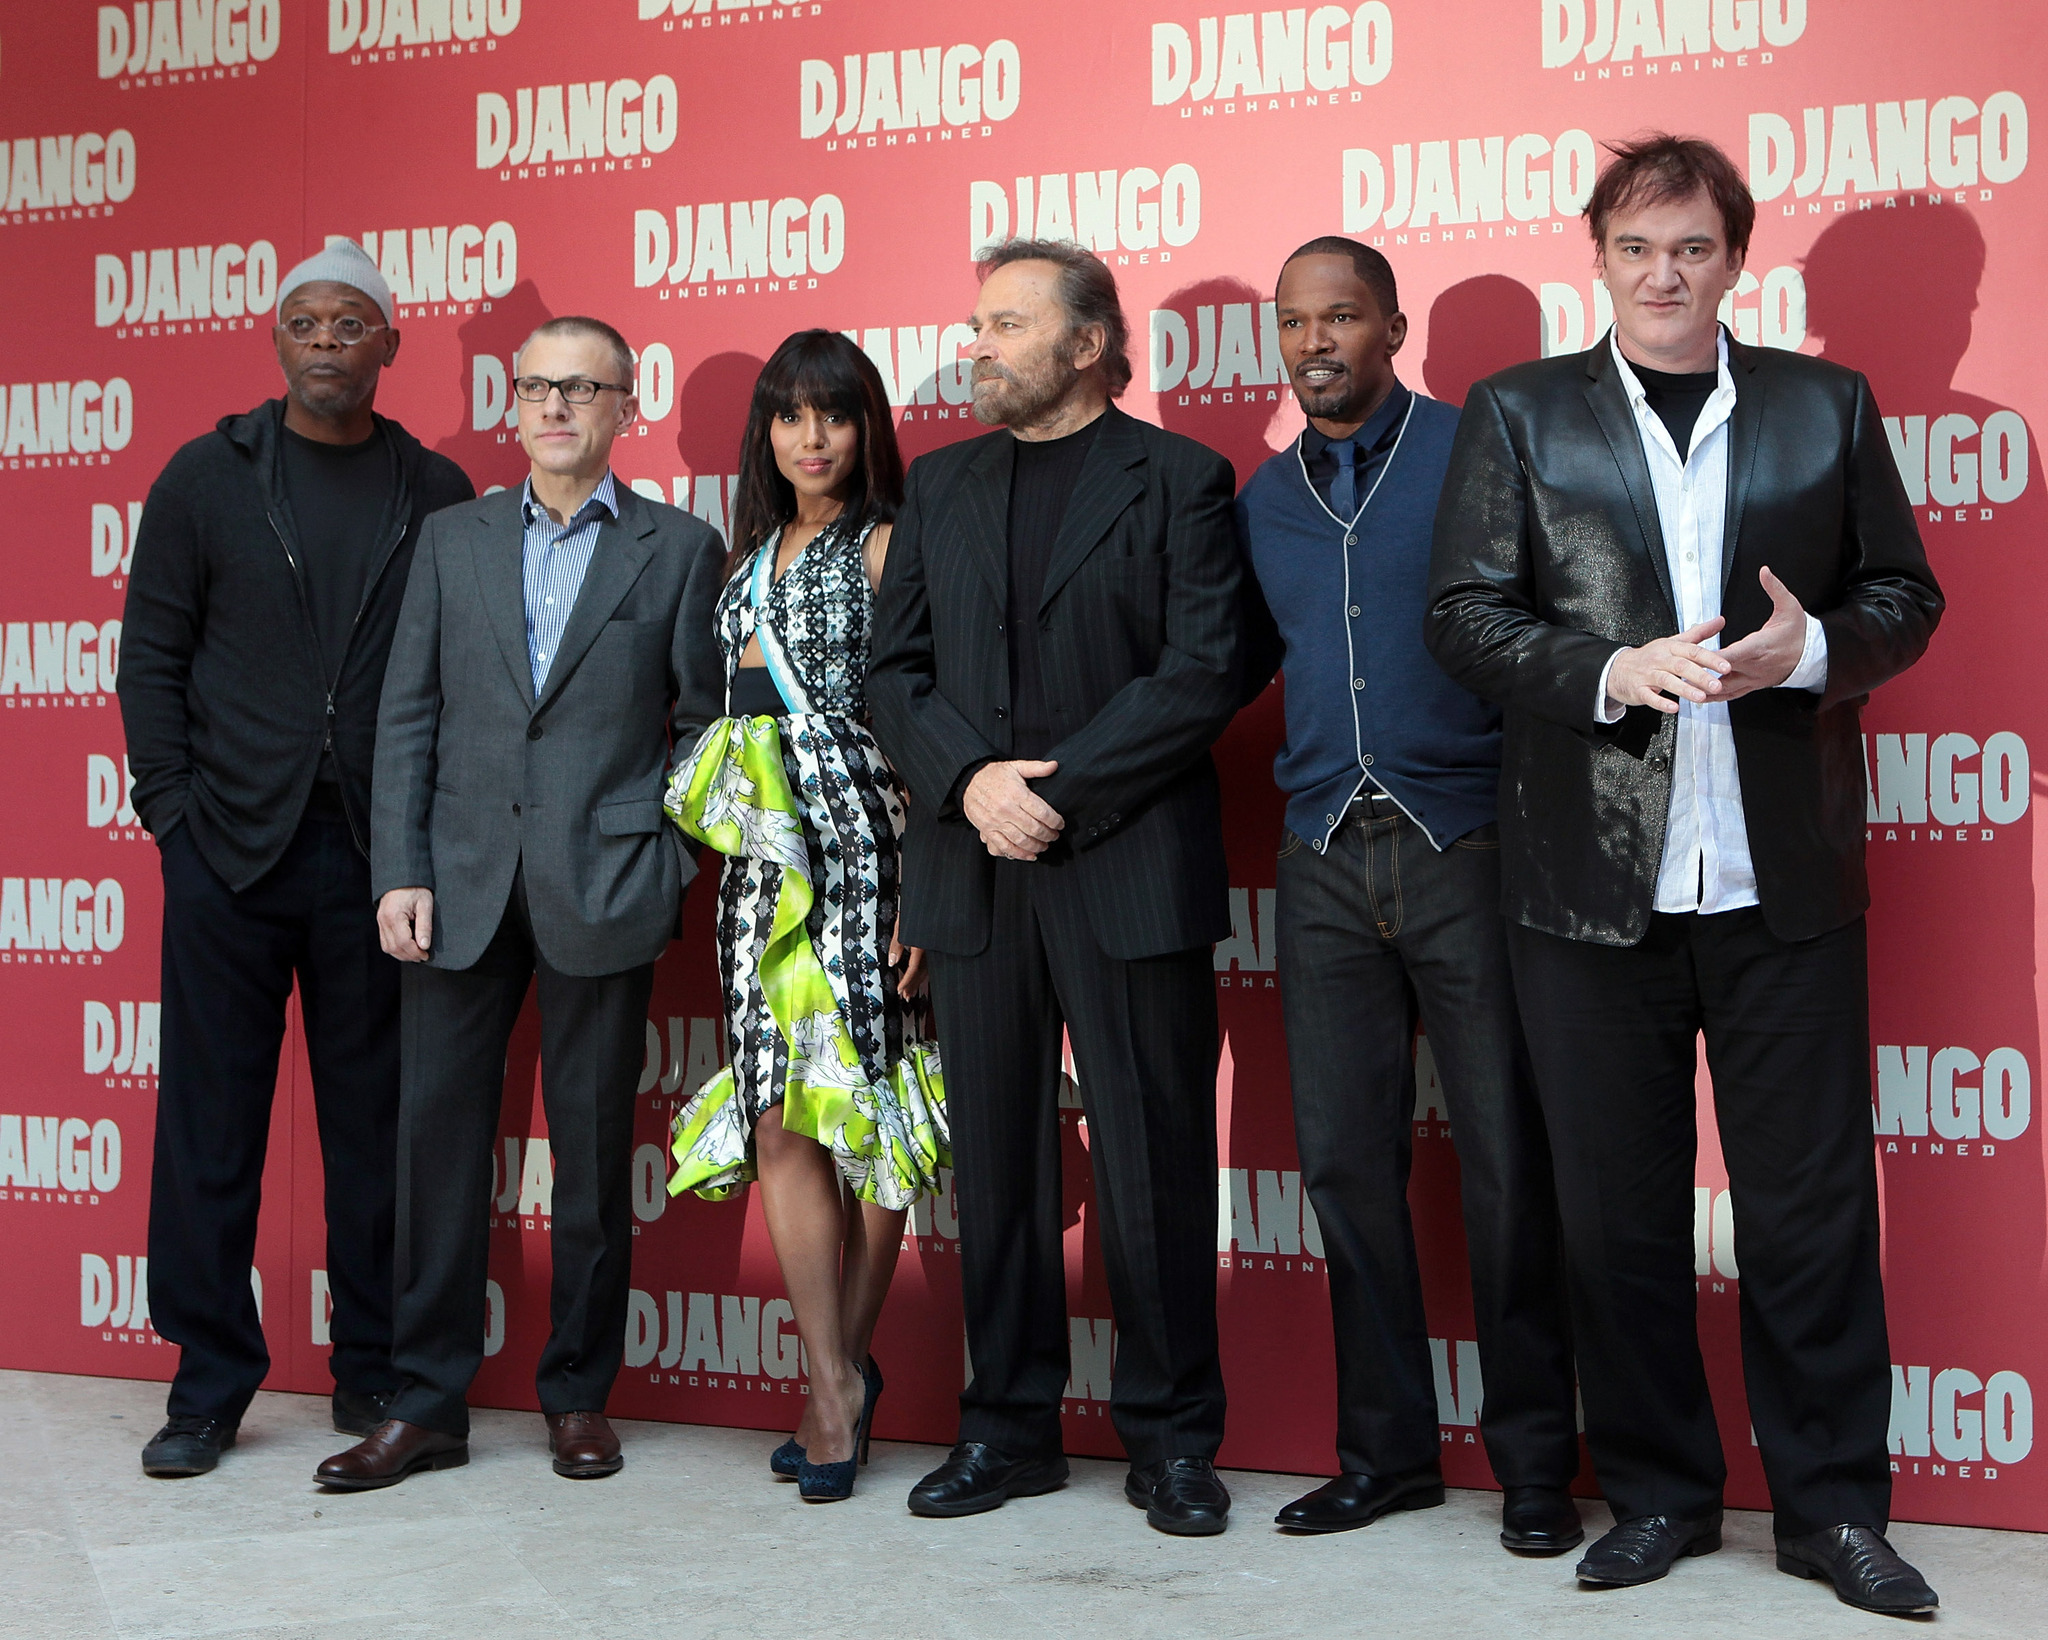 Samuel L. Jackson, Quentin Tarantino, Jamie Foxx, Franco Nero, Christoph Waltz and Kerry Washington at event of Istrukes Dzango (2012)